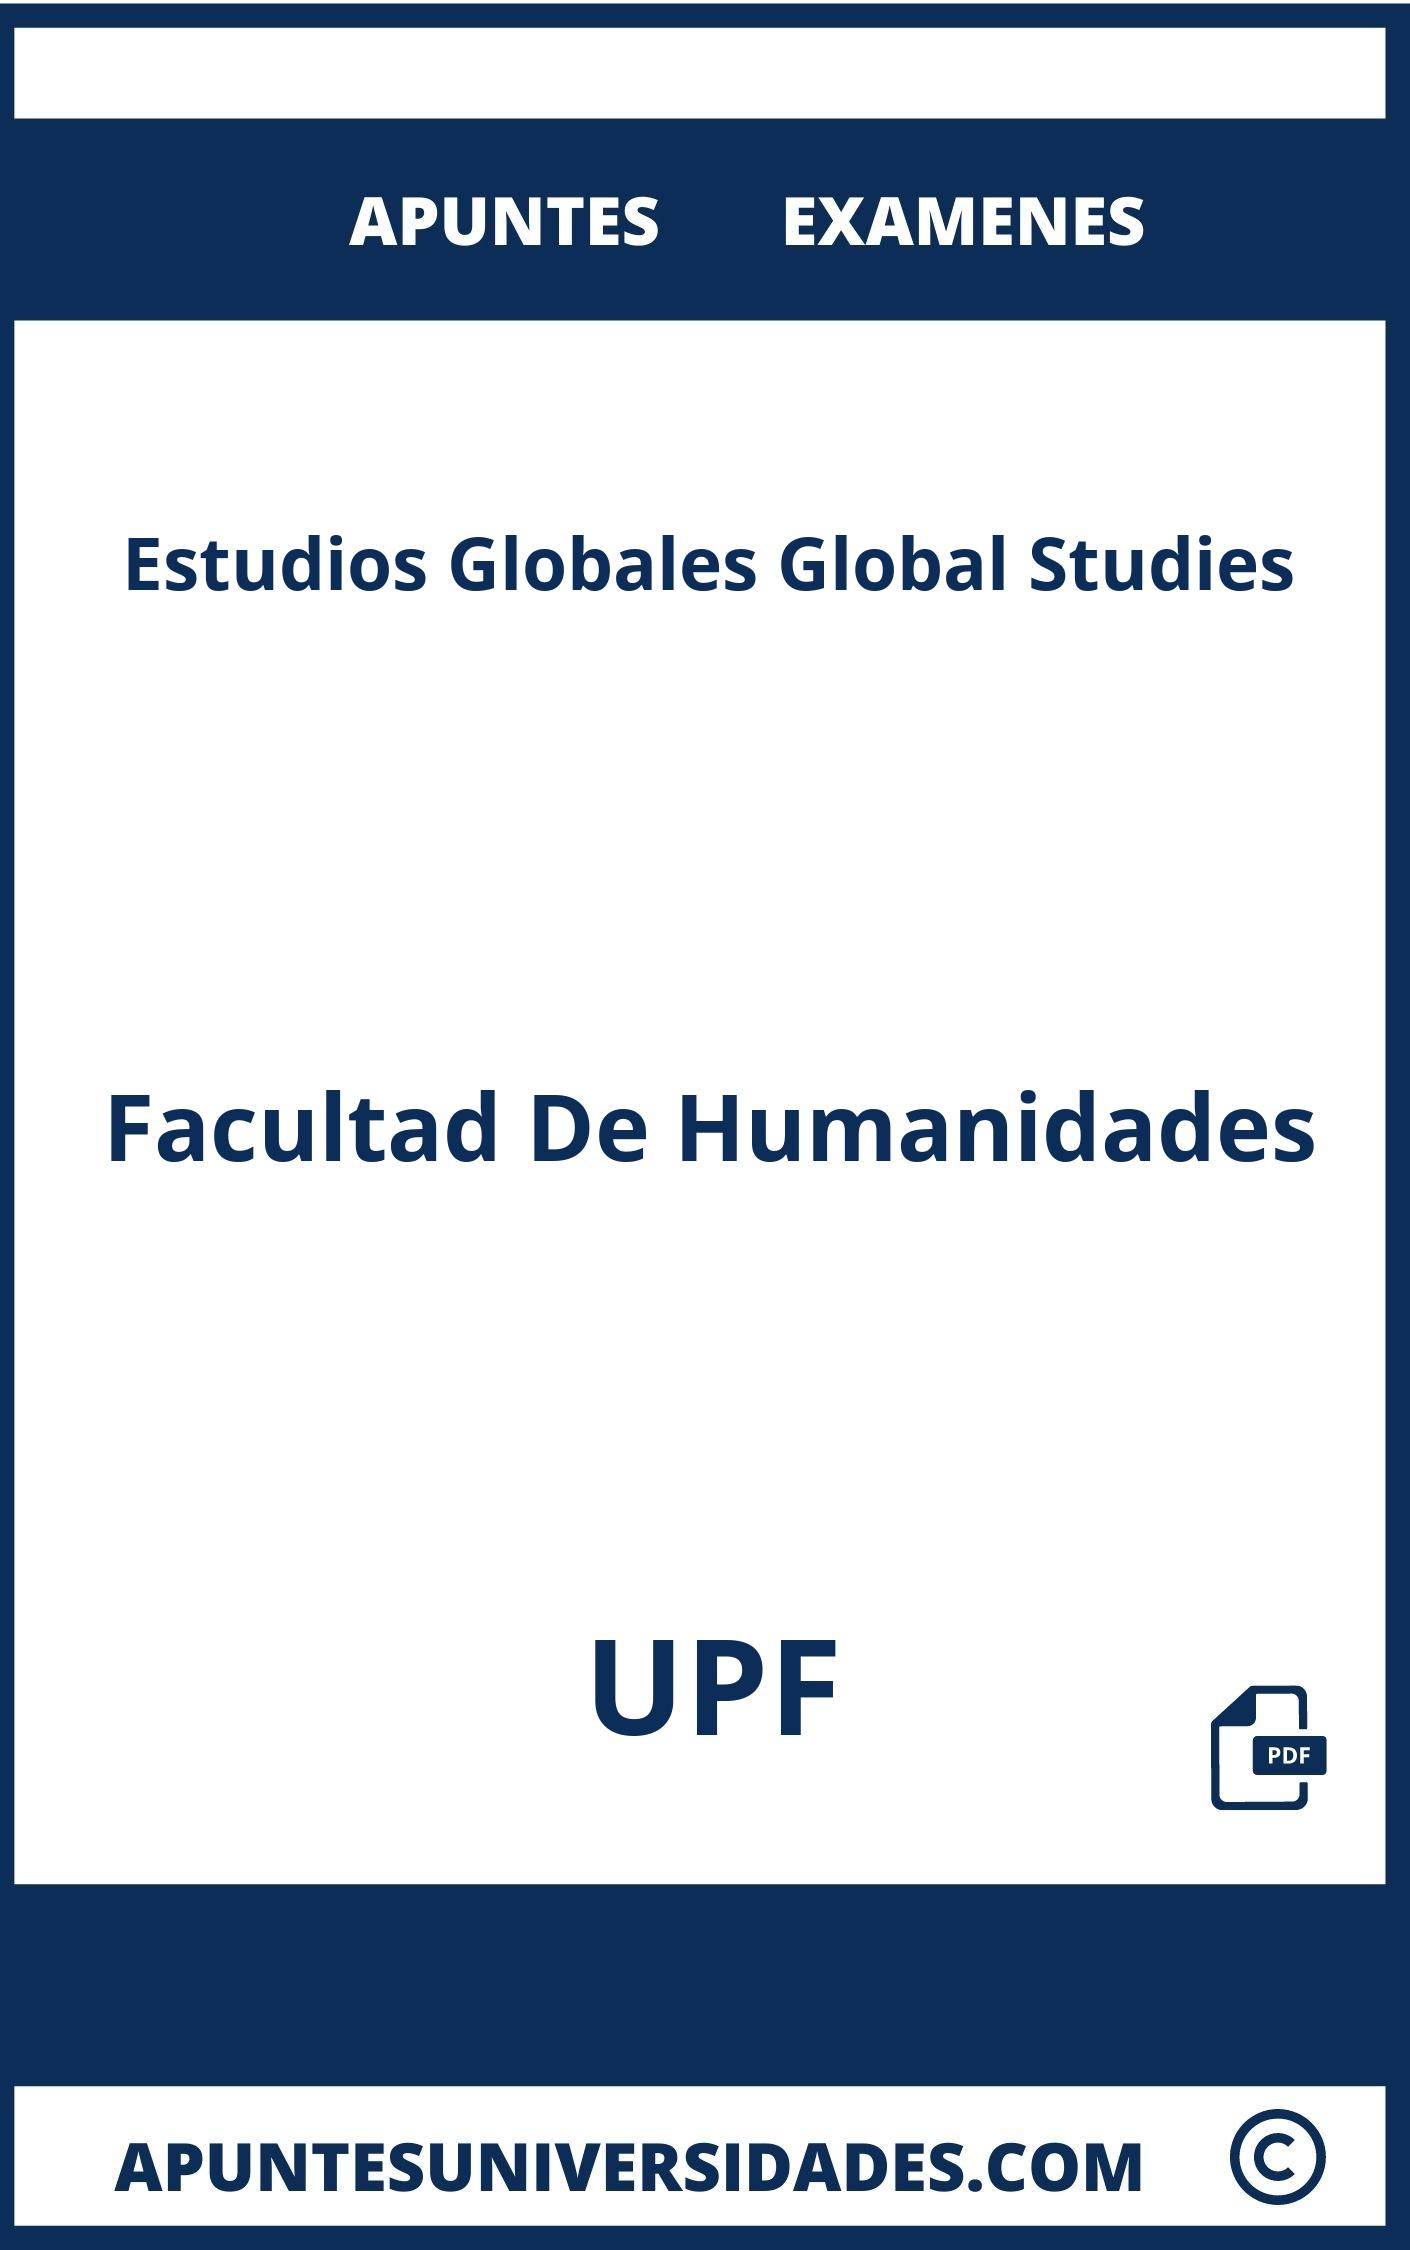 Apuntes y Examenes de Estudios Globales Global Studies UPF